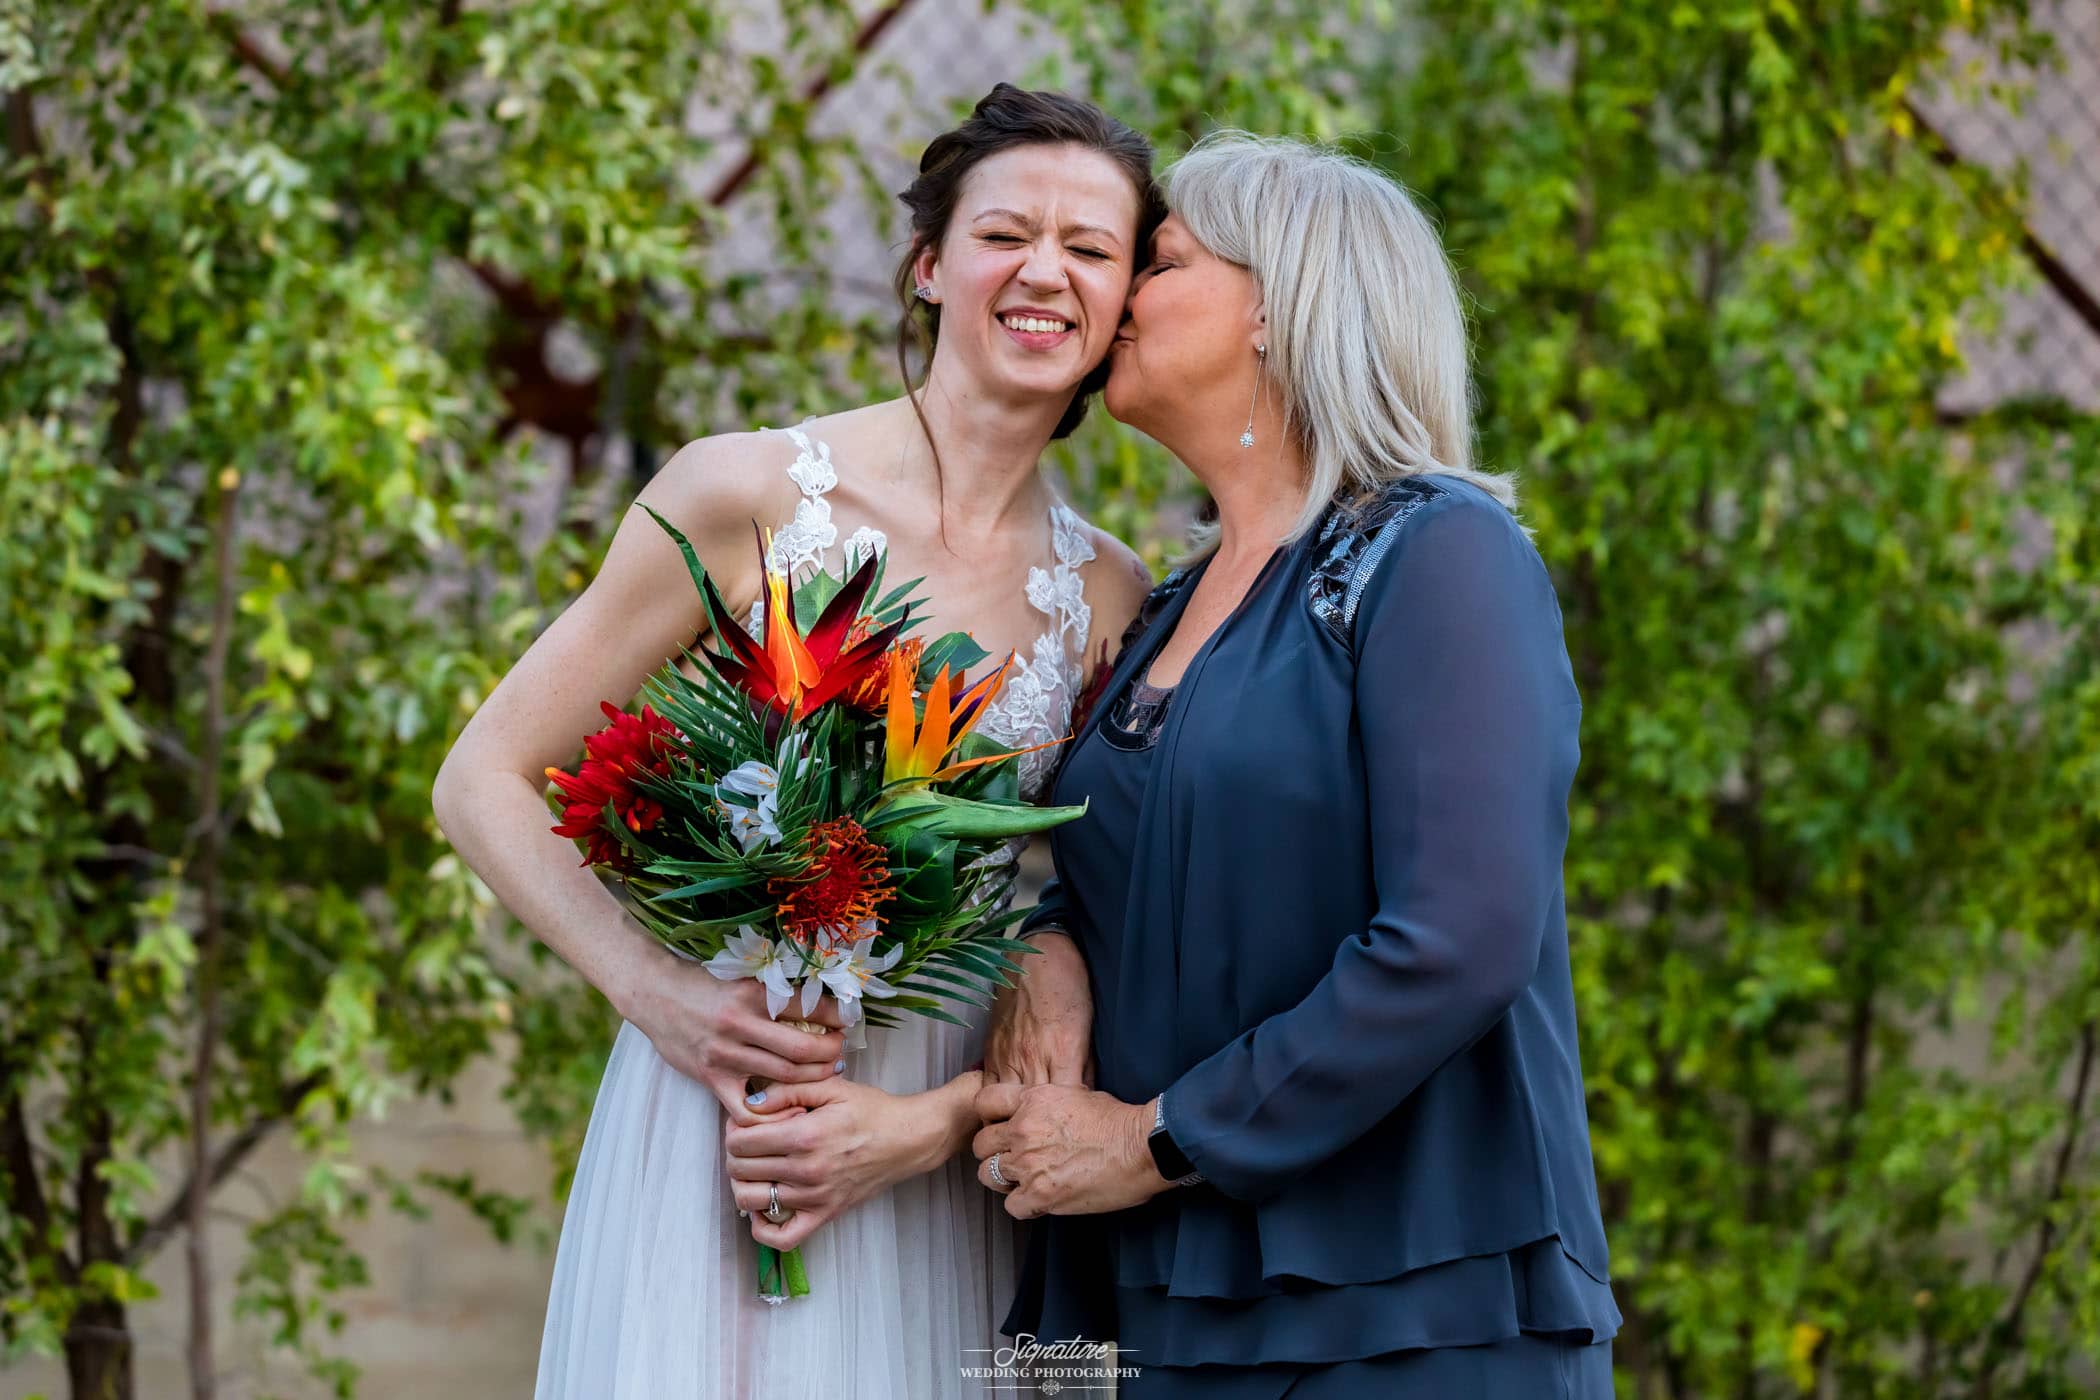 Matriarch kissing bride on cheek